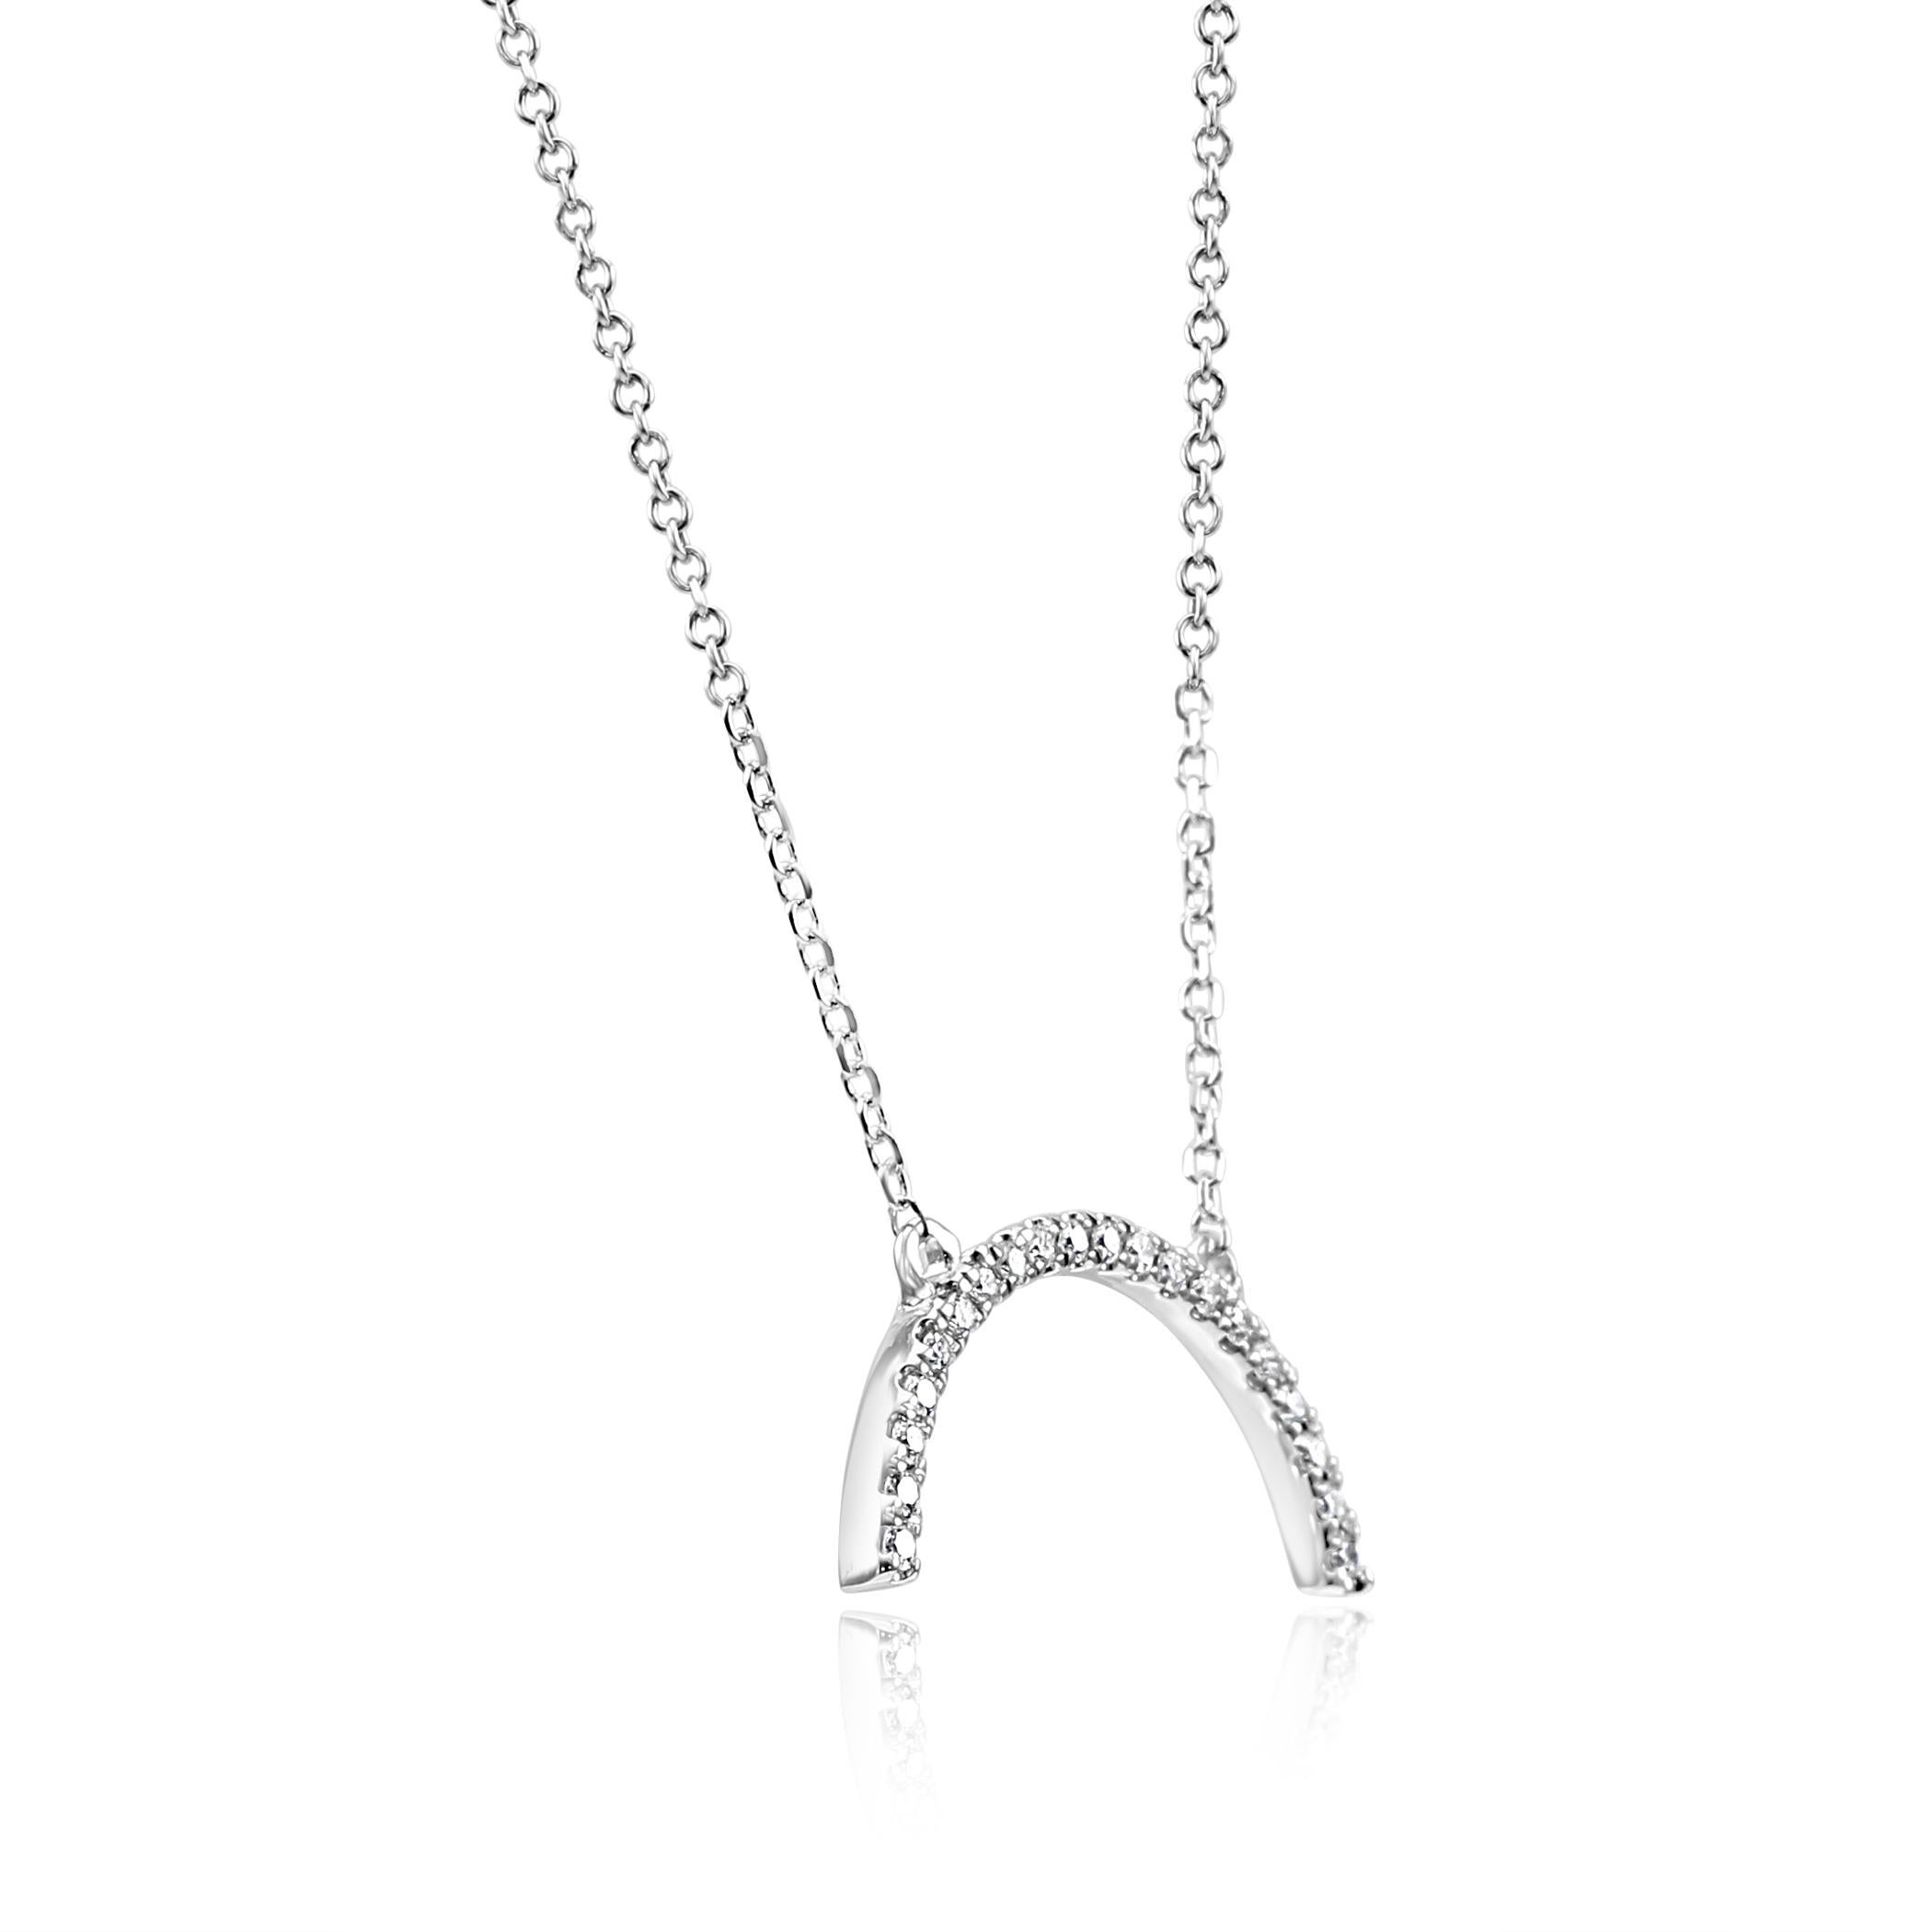 Round Cut White Diamond Round White Gold Fashion Drop Pendant Chain Necklace